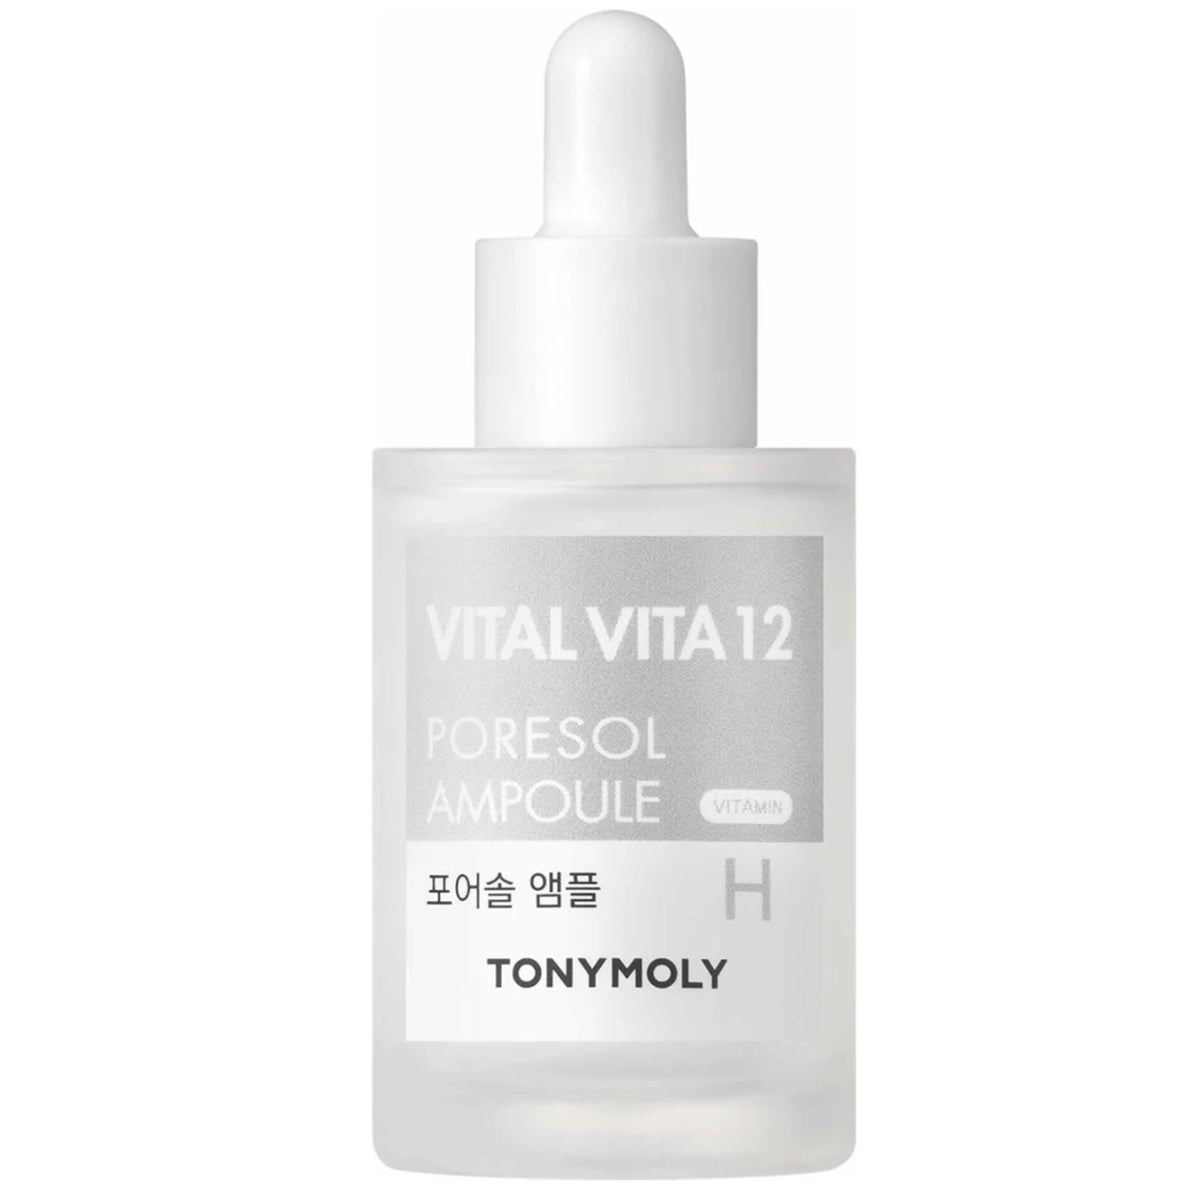 Tonymoly - Vital Vita 12 Poresol Ampoule - 30 ml